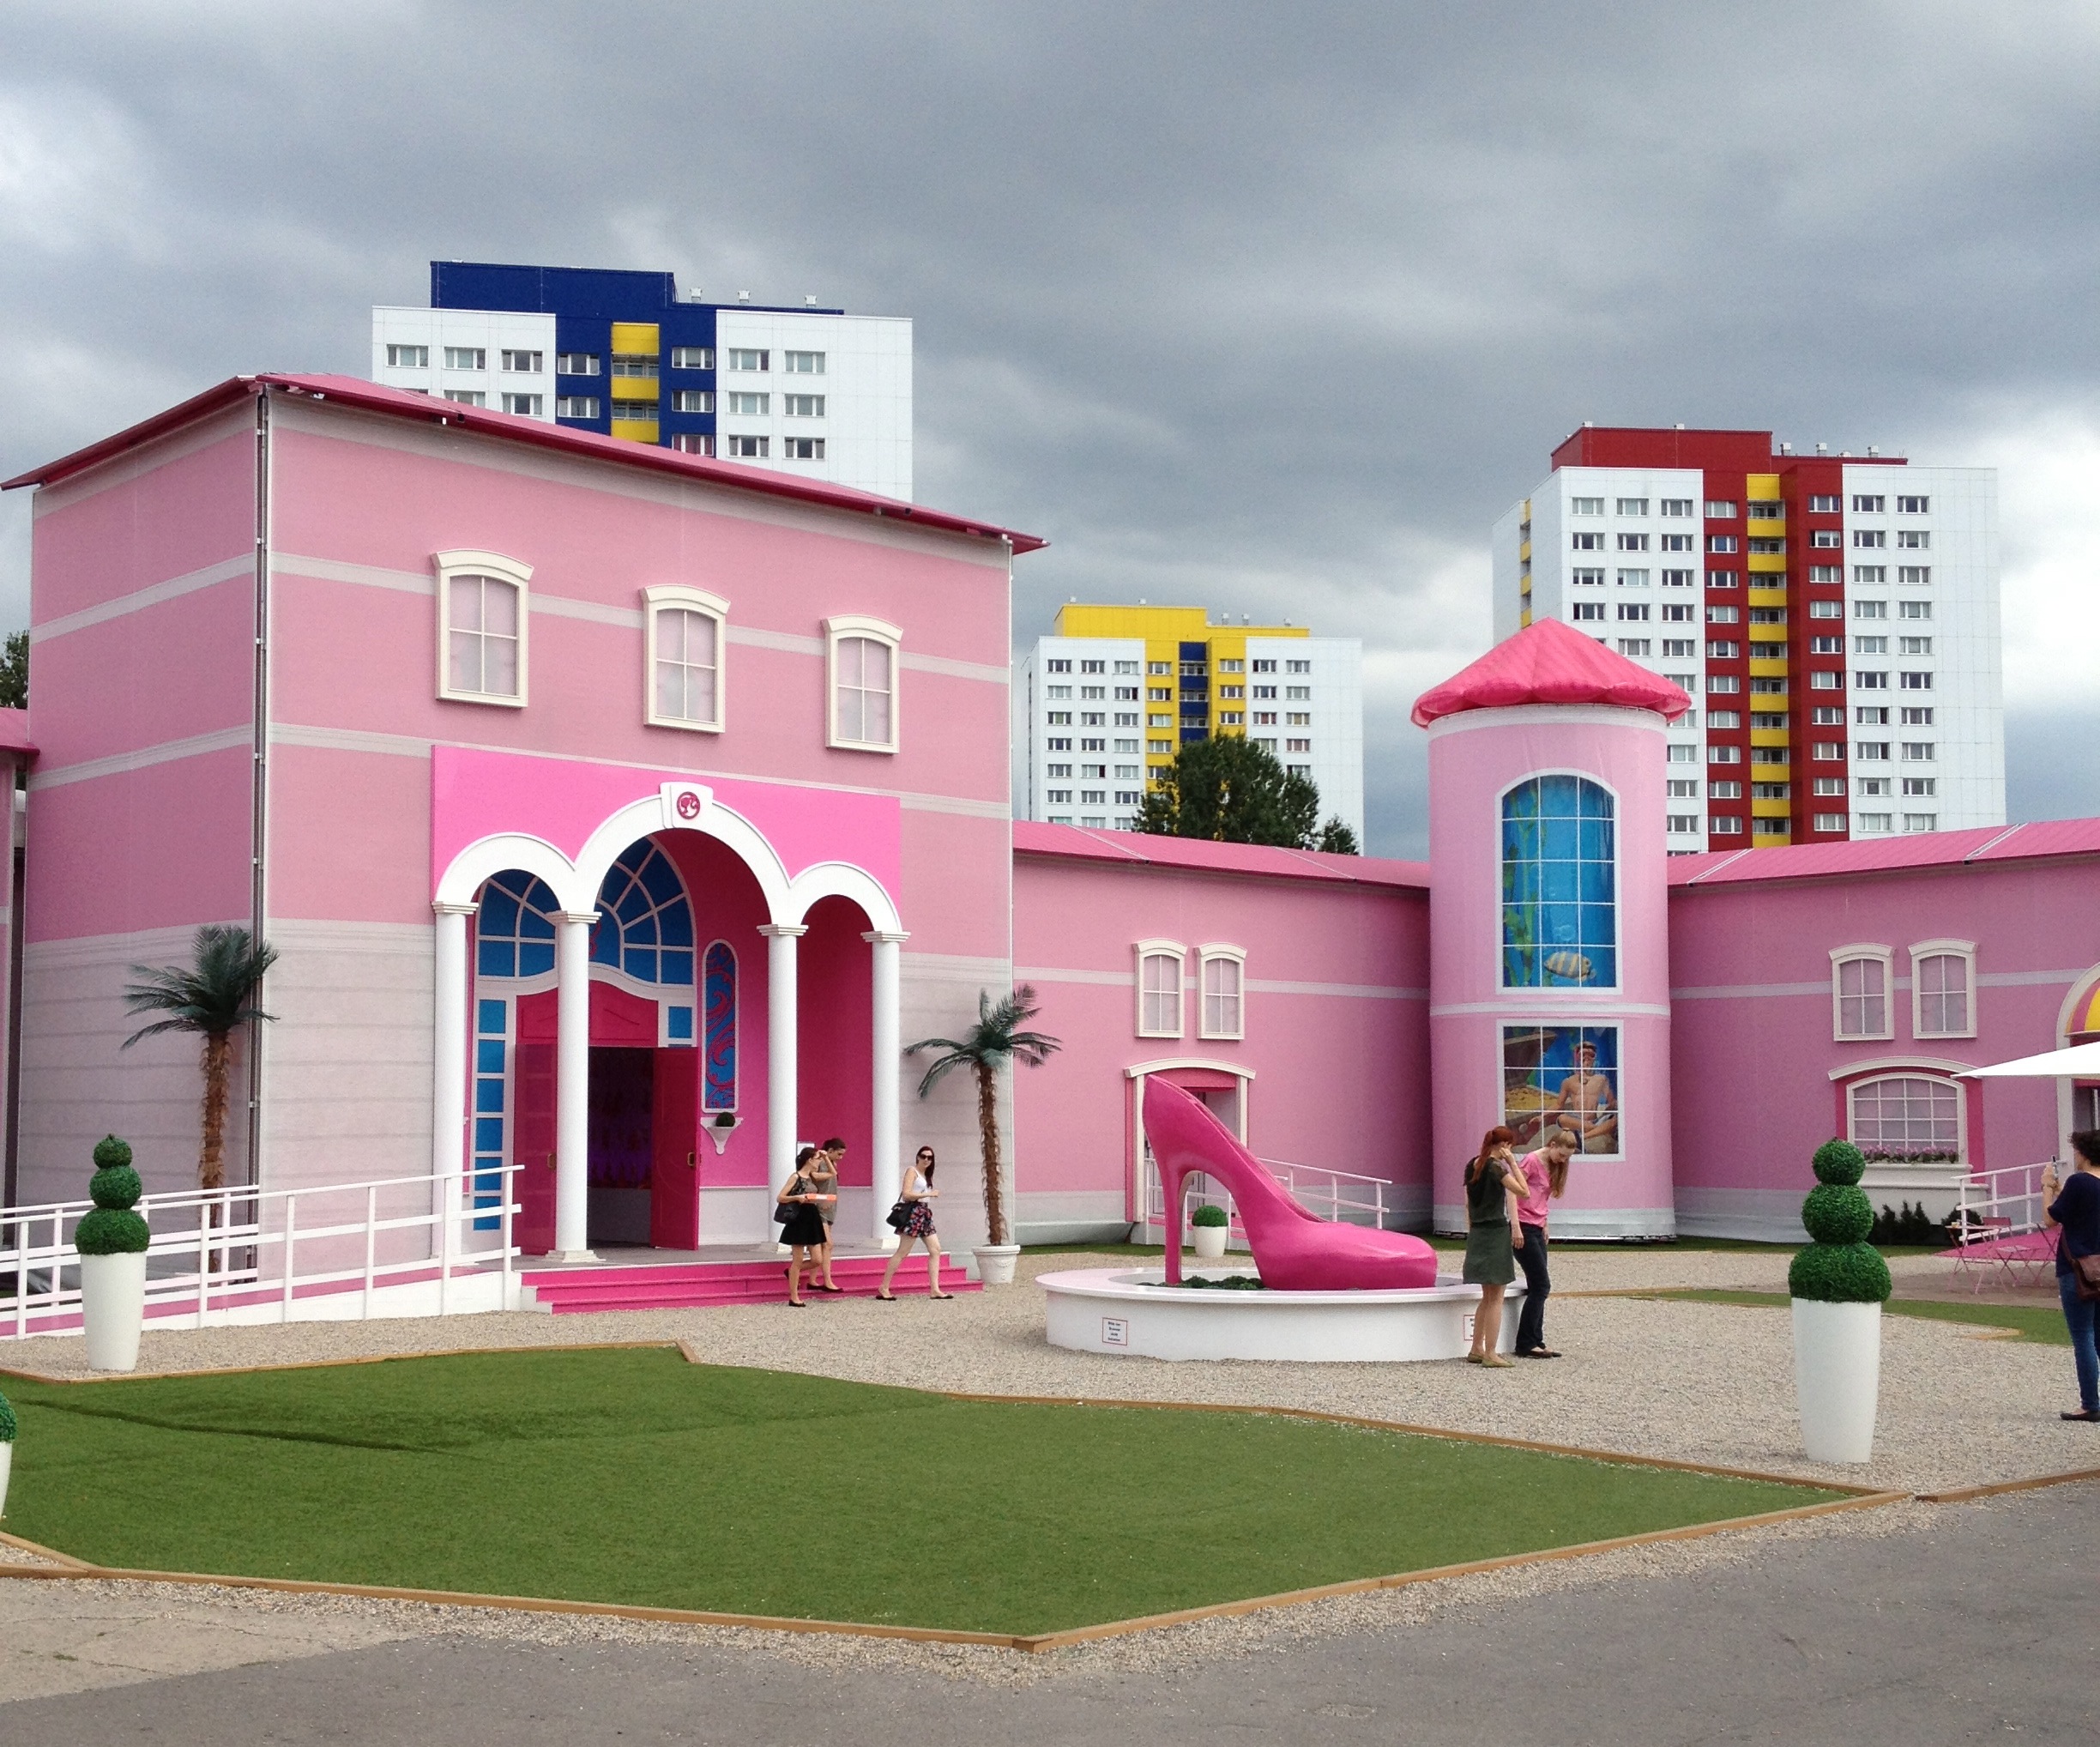 life size barbie dream house